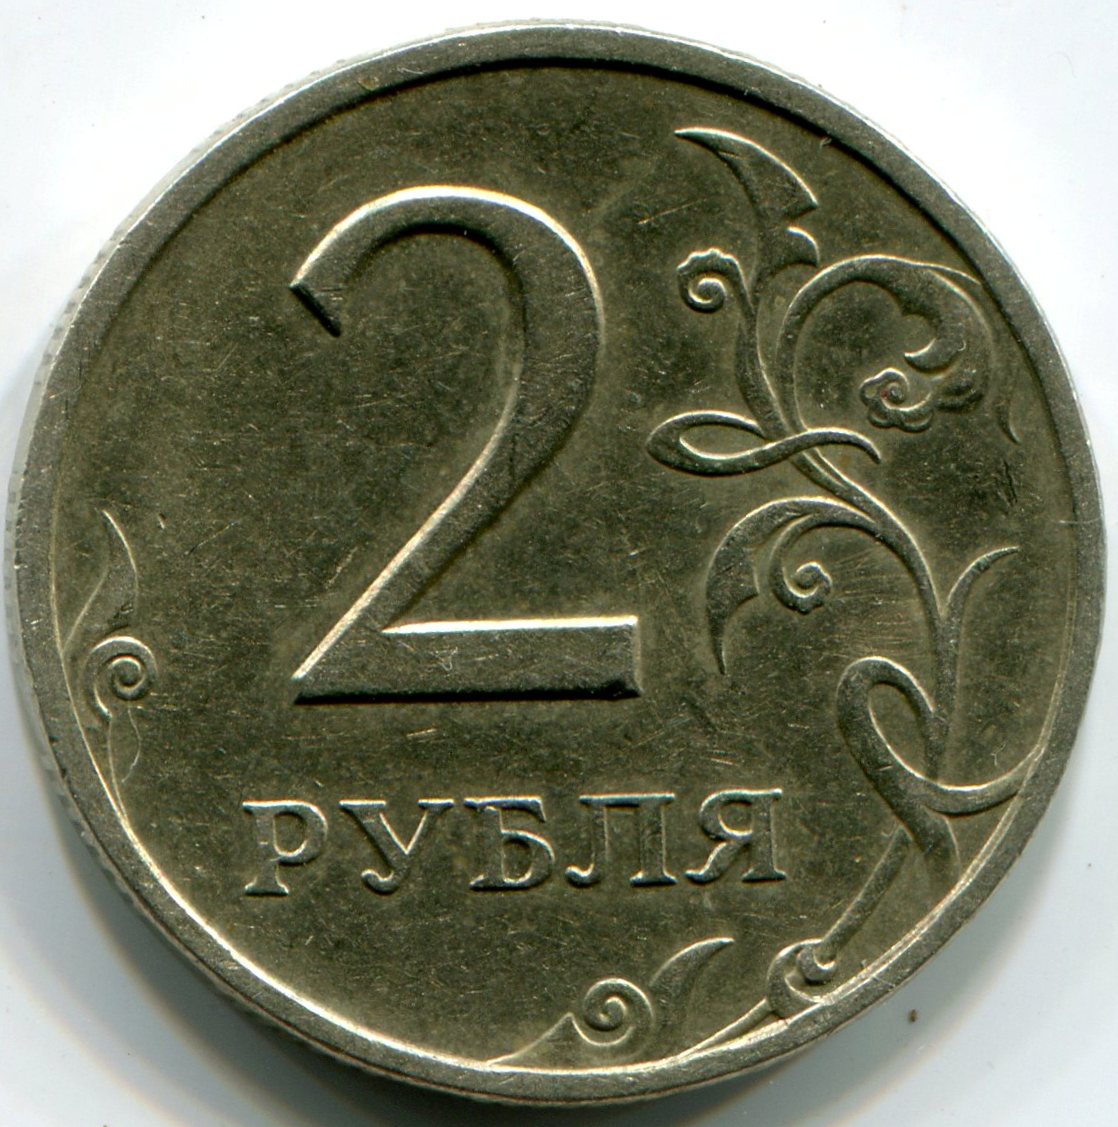 Монета 2 рубля. Монета два рубля. Монеты 2011 2 рубля. Монета 2 рубля на прозрачном фоне. 2 рубль 1997 года цена стоимость